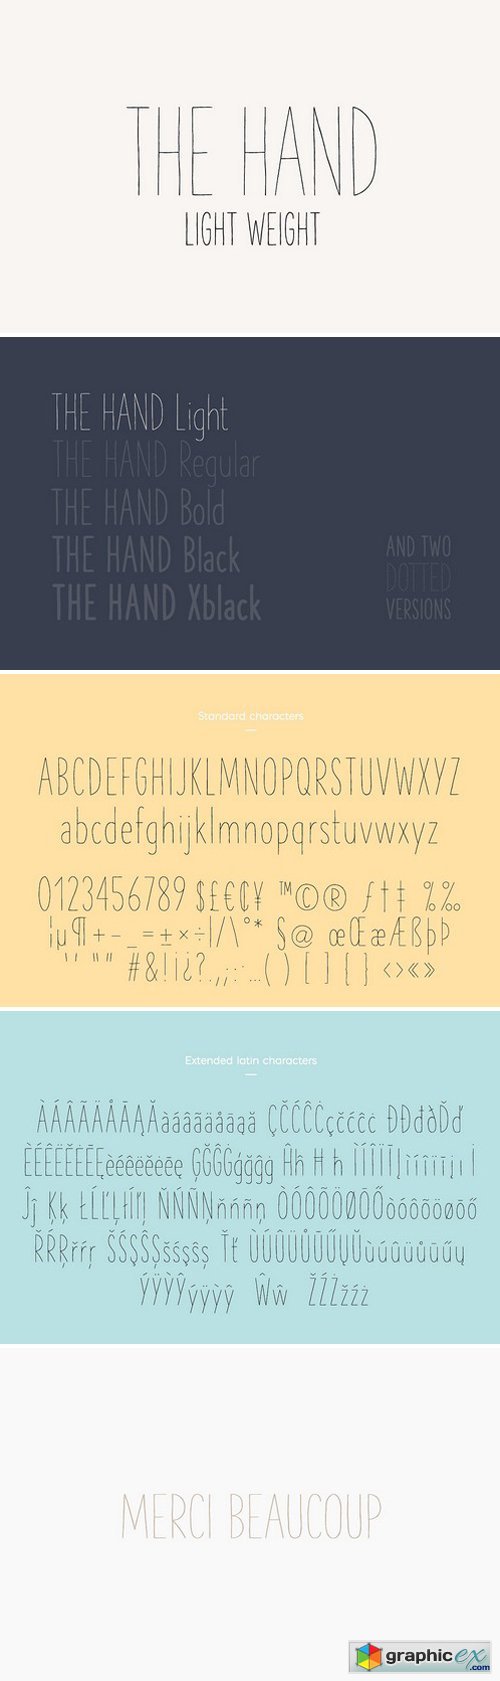 The Hand Font - Light